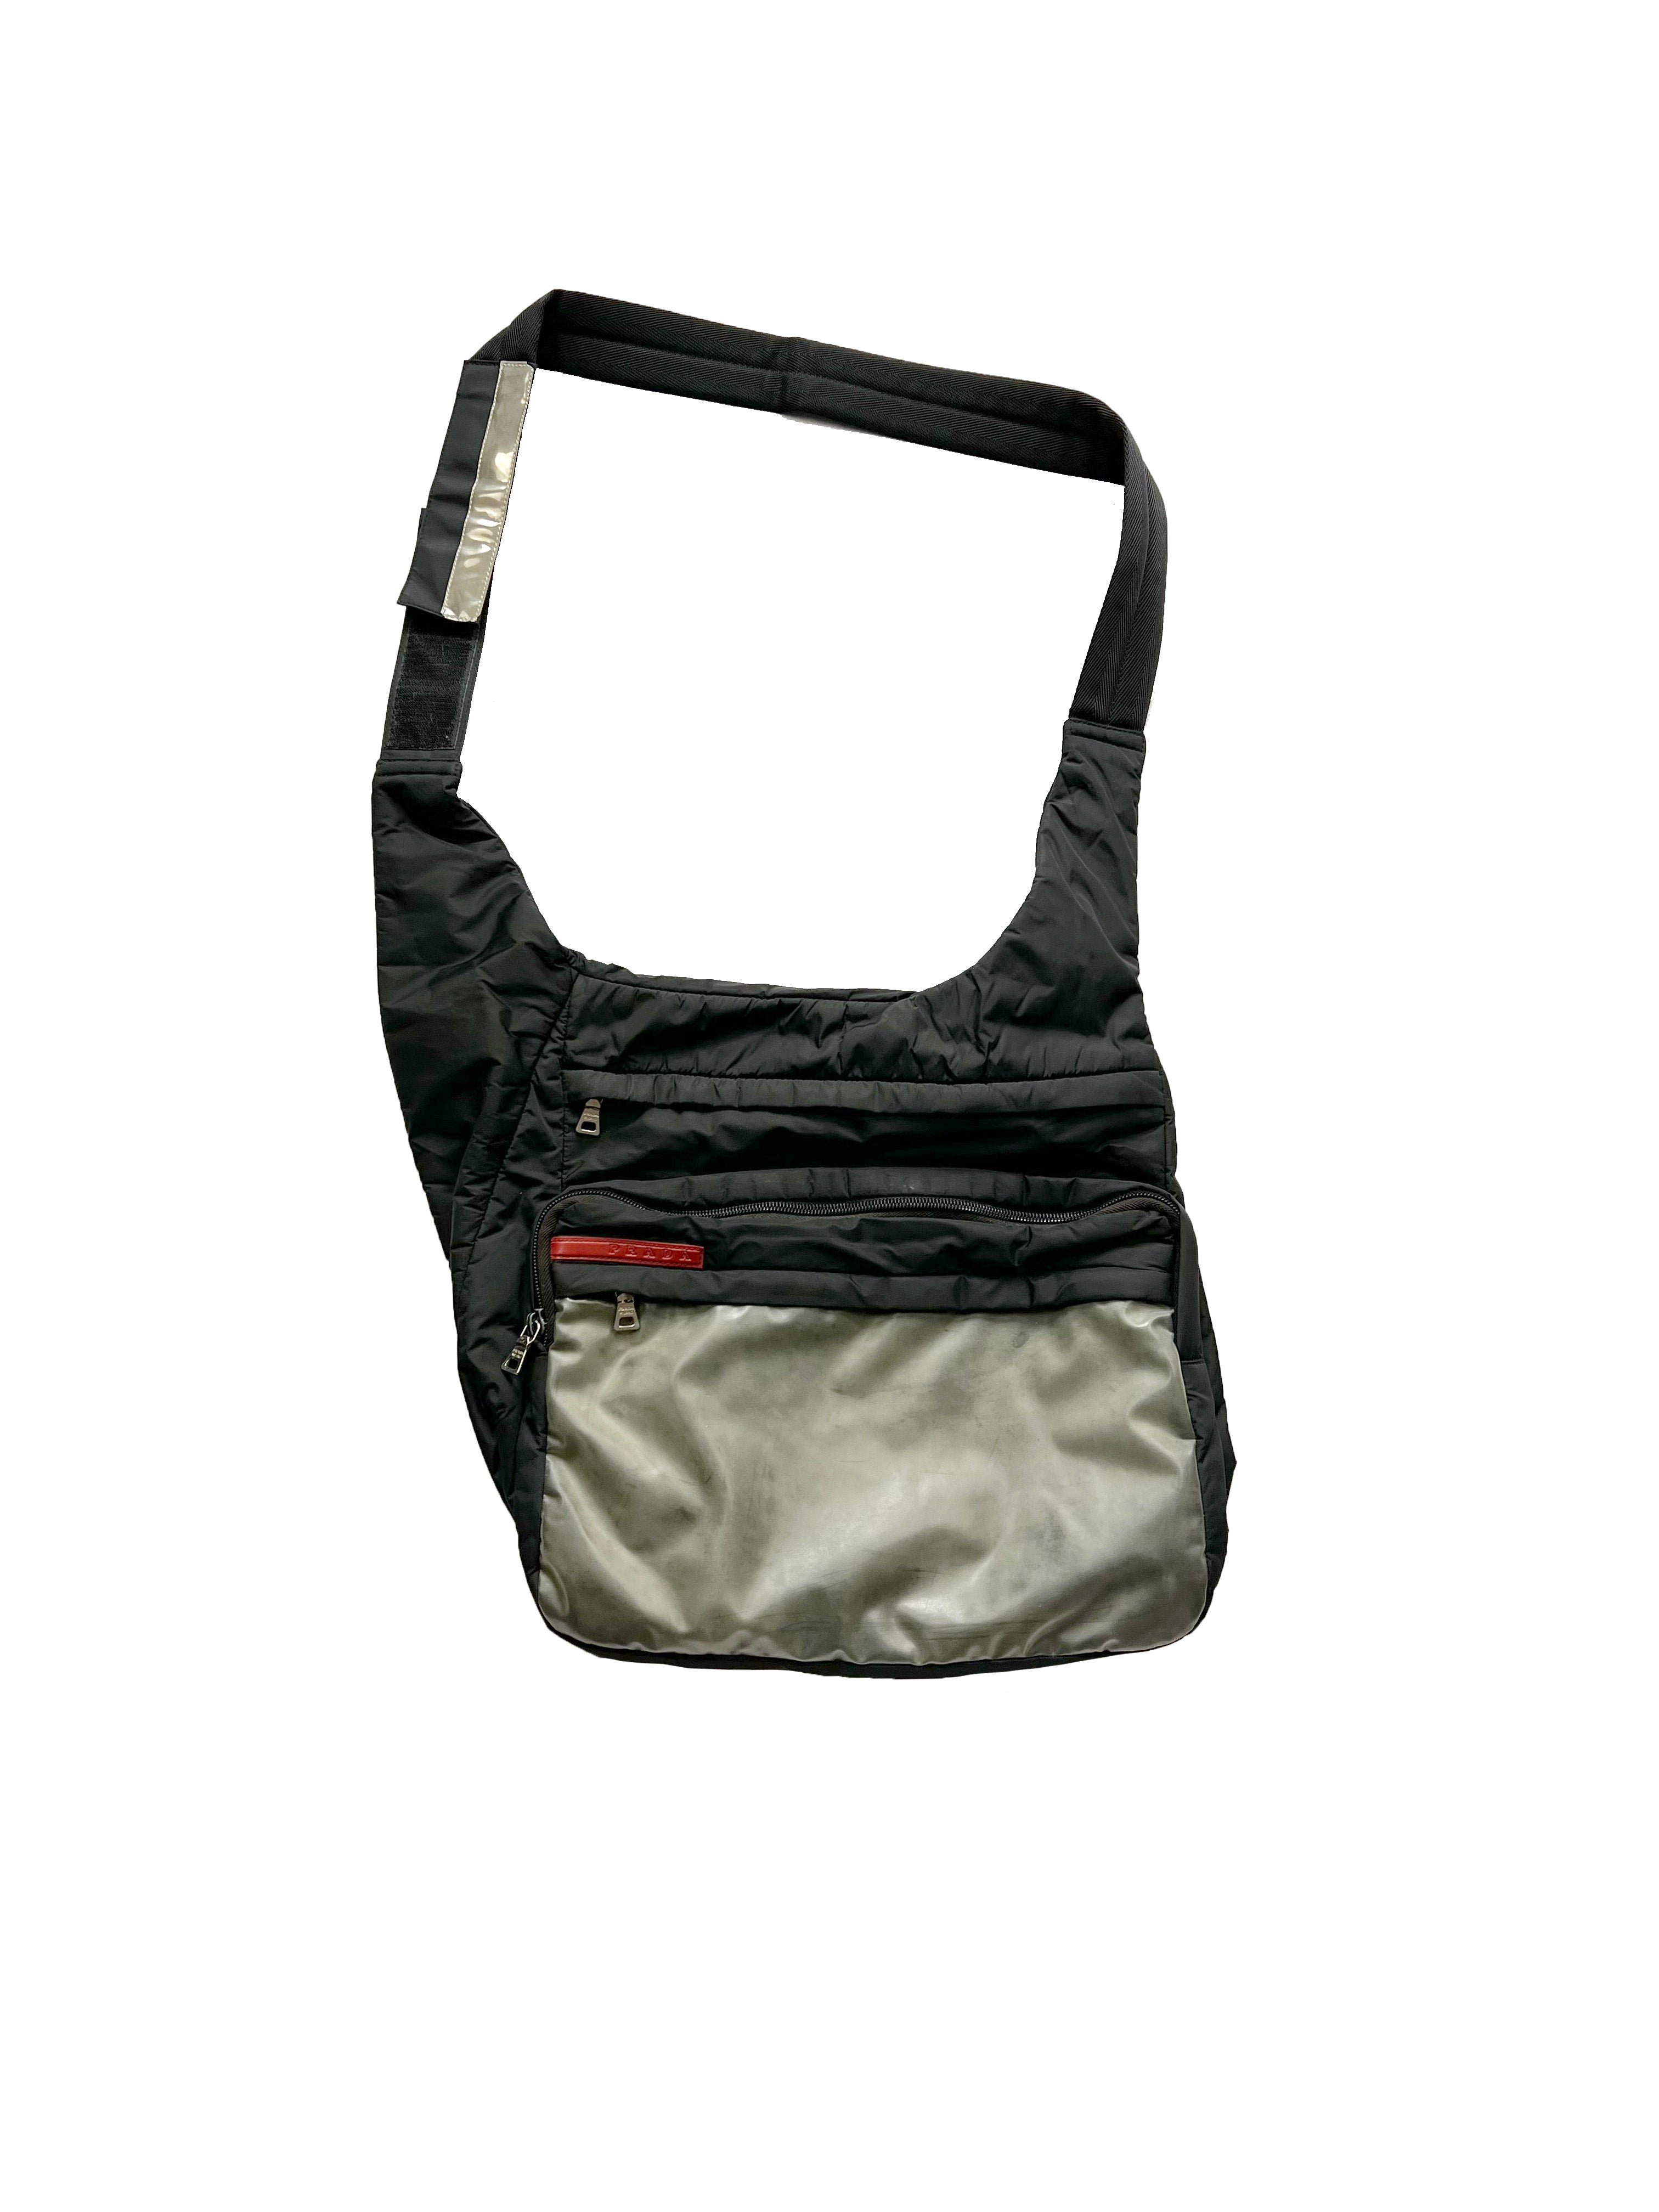 Prada Sport 3m Big Side Bag S/S 1999 – Sekkle